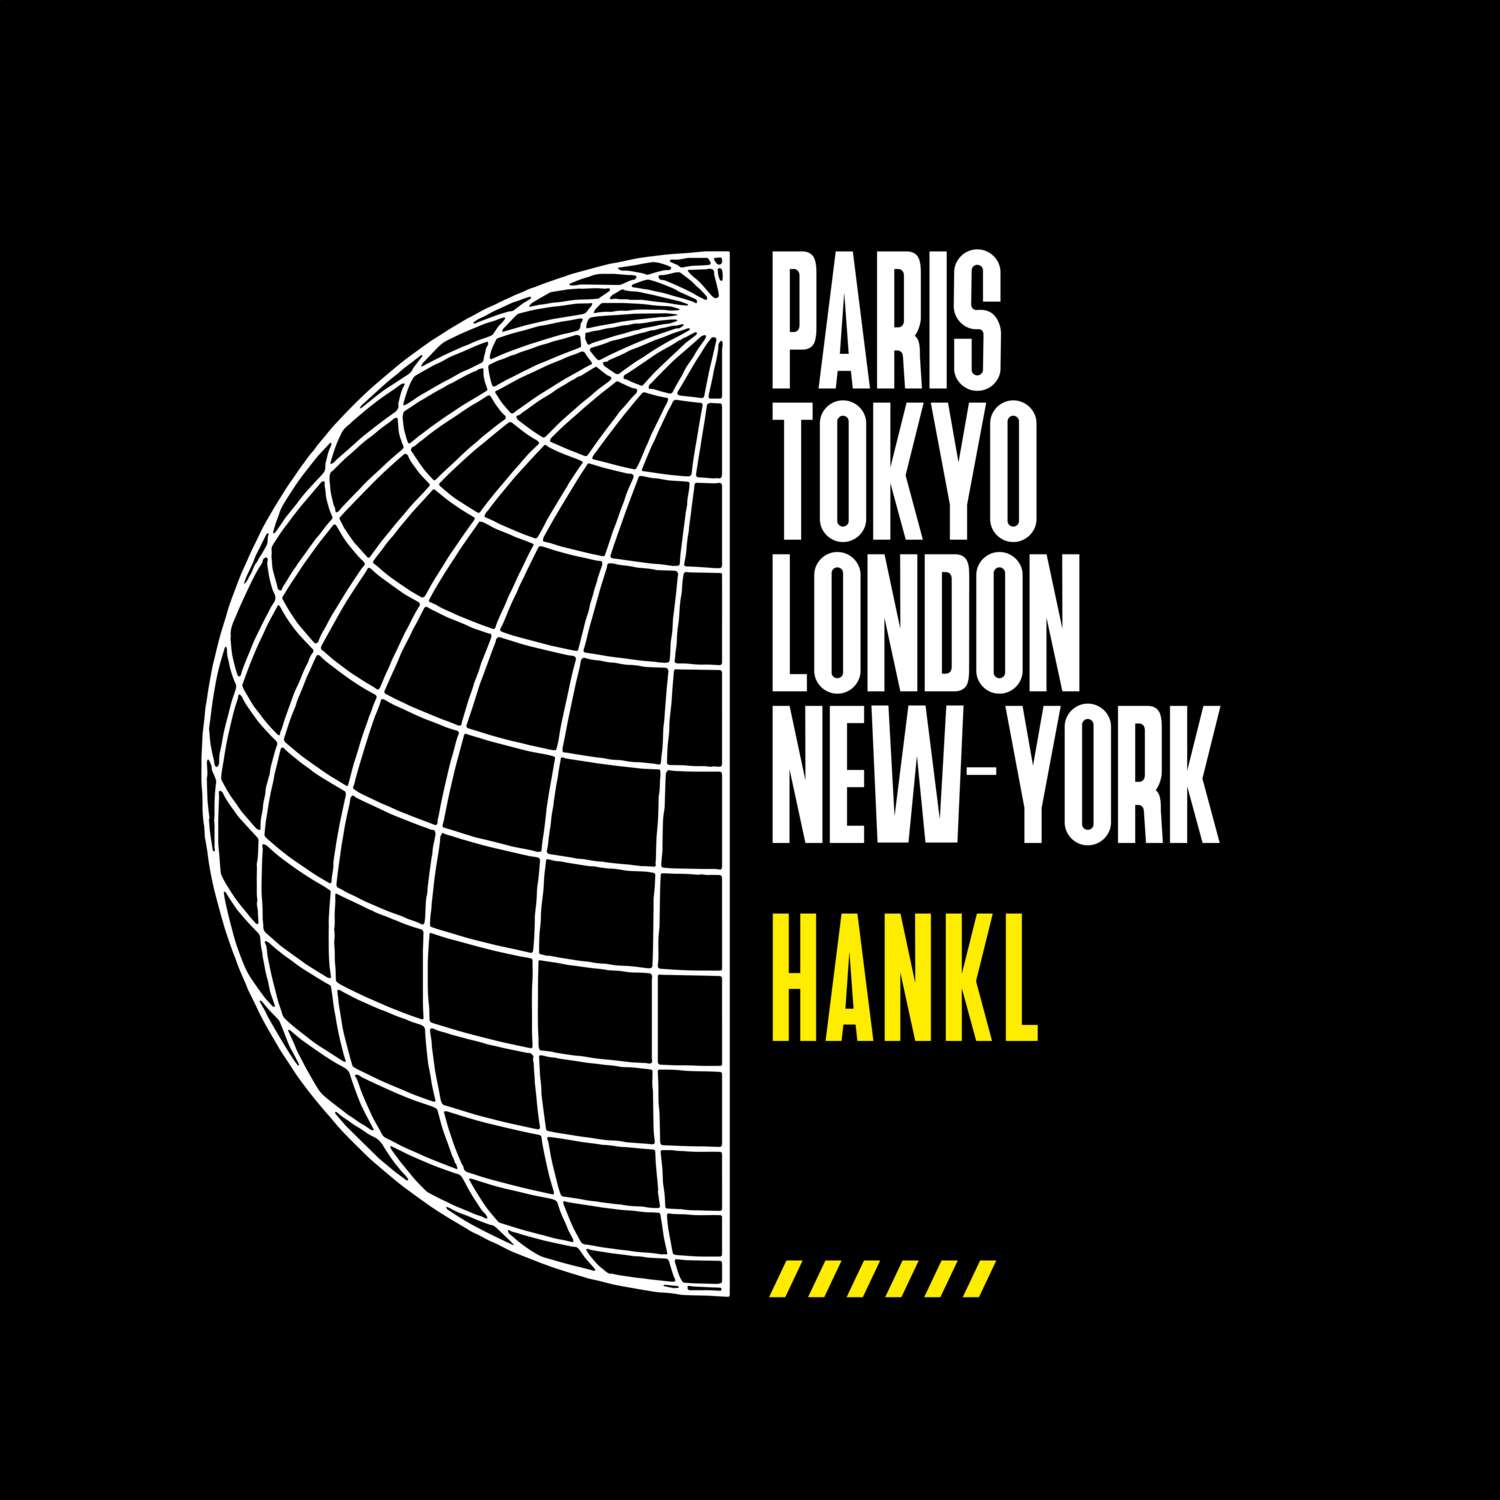 Hankl T-Shirt »Paris Tokyo London«